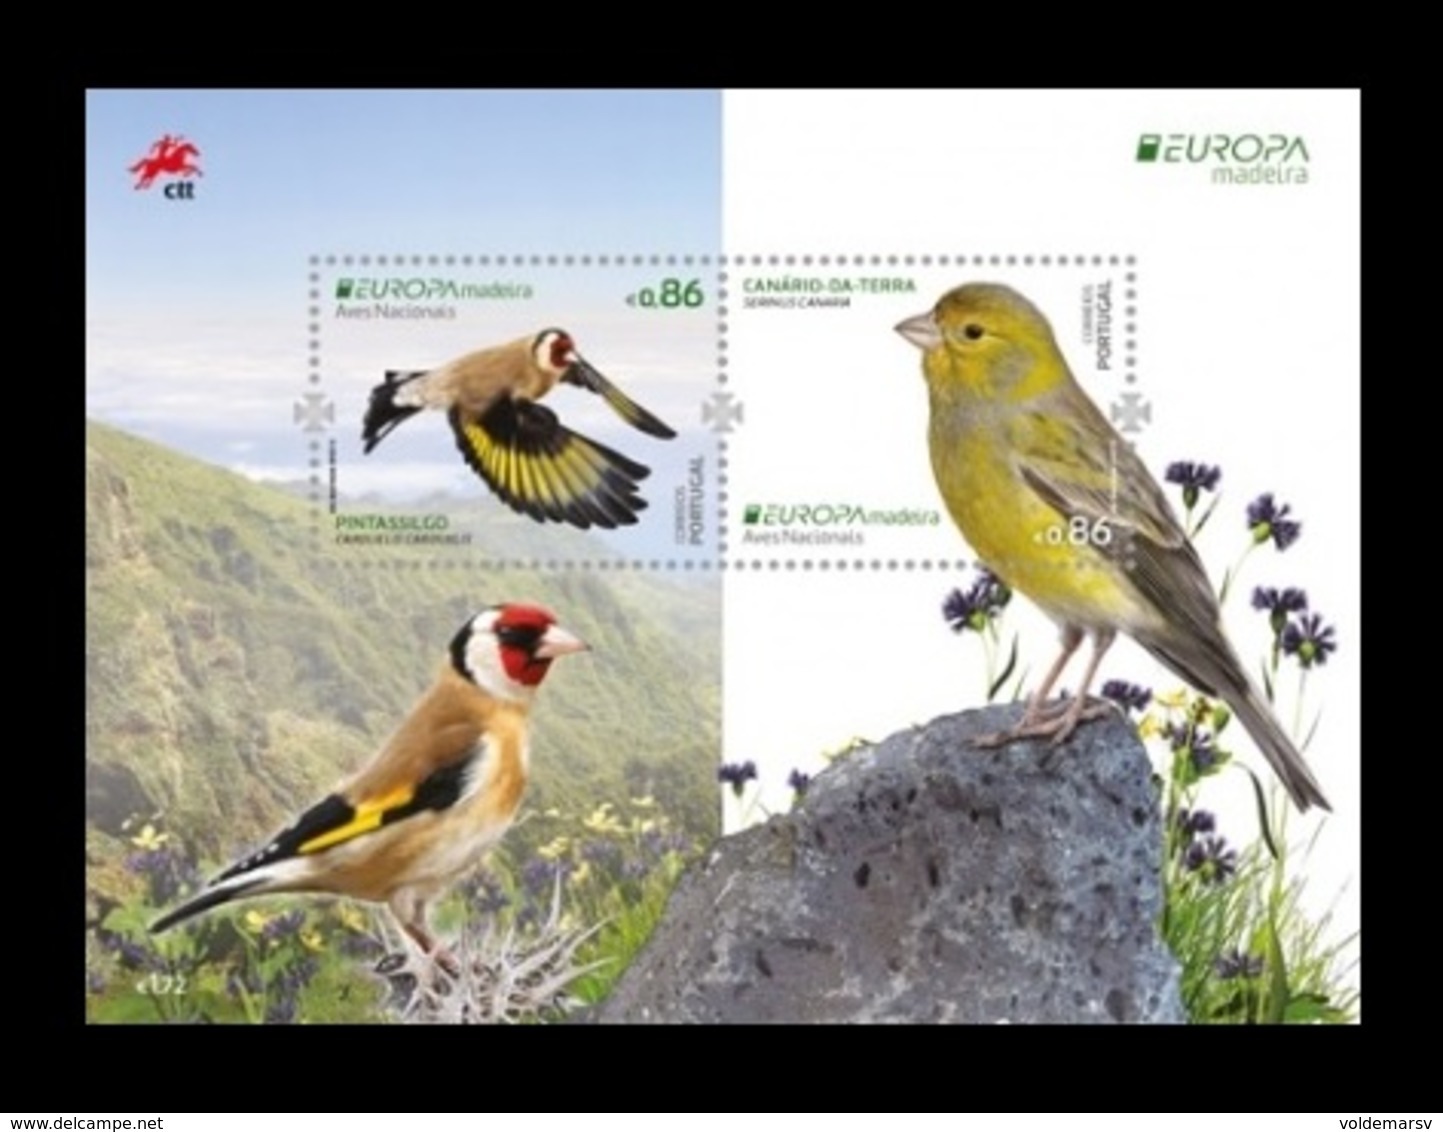 Portugal (Madeira) 2019 Mih. 391/92 (Bl.71) Europa. National Birds. Fauna. Atlantic Canary And European Goldfinch MNH ** - Madeira